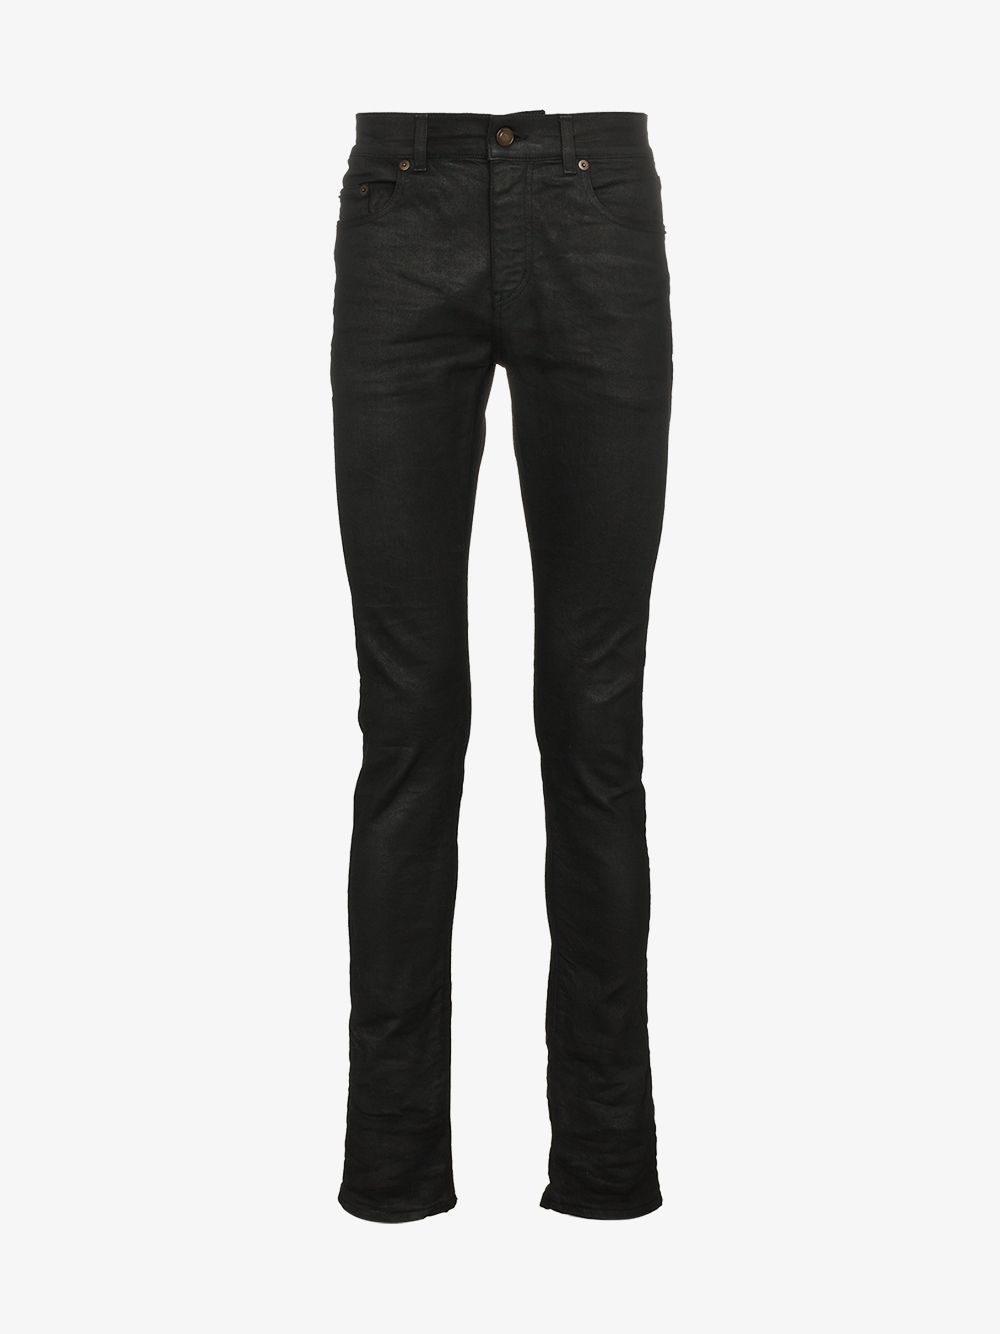 Saint Laurent black coated skinny jeans | Browns Fashion